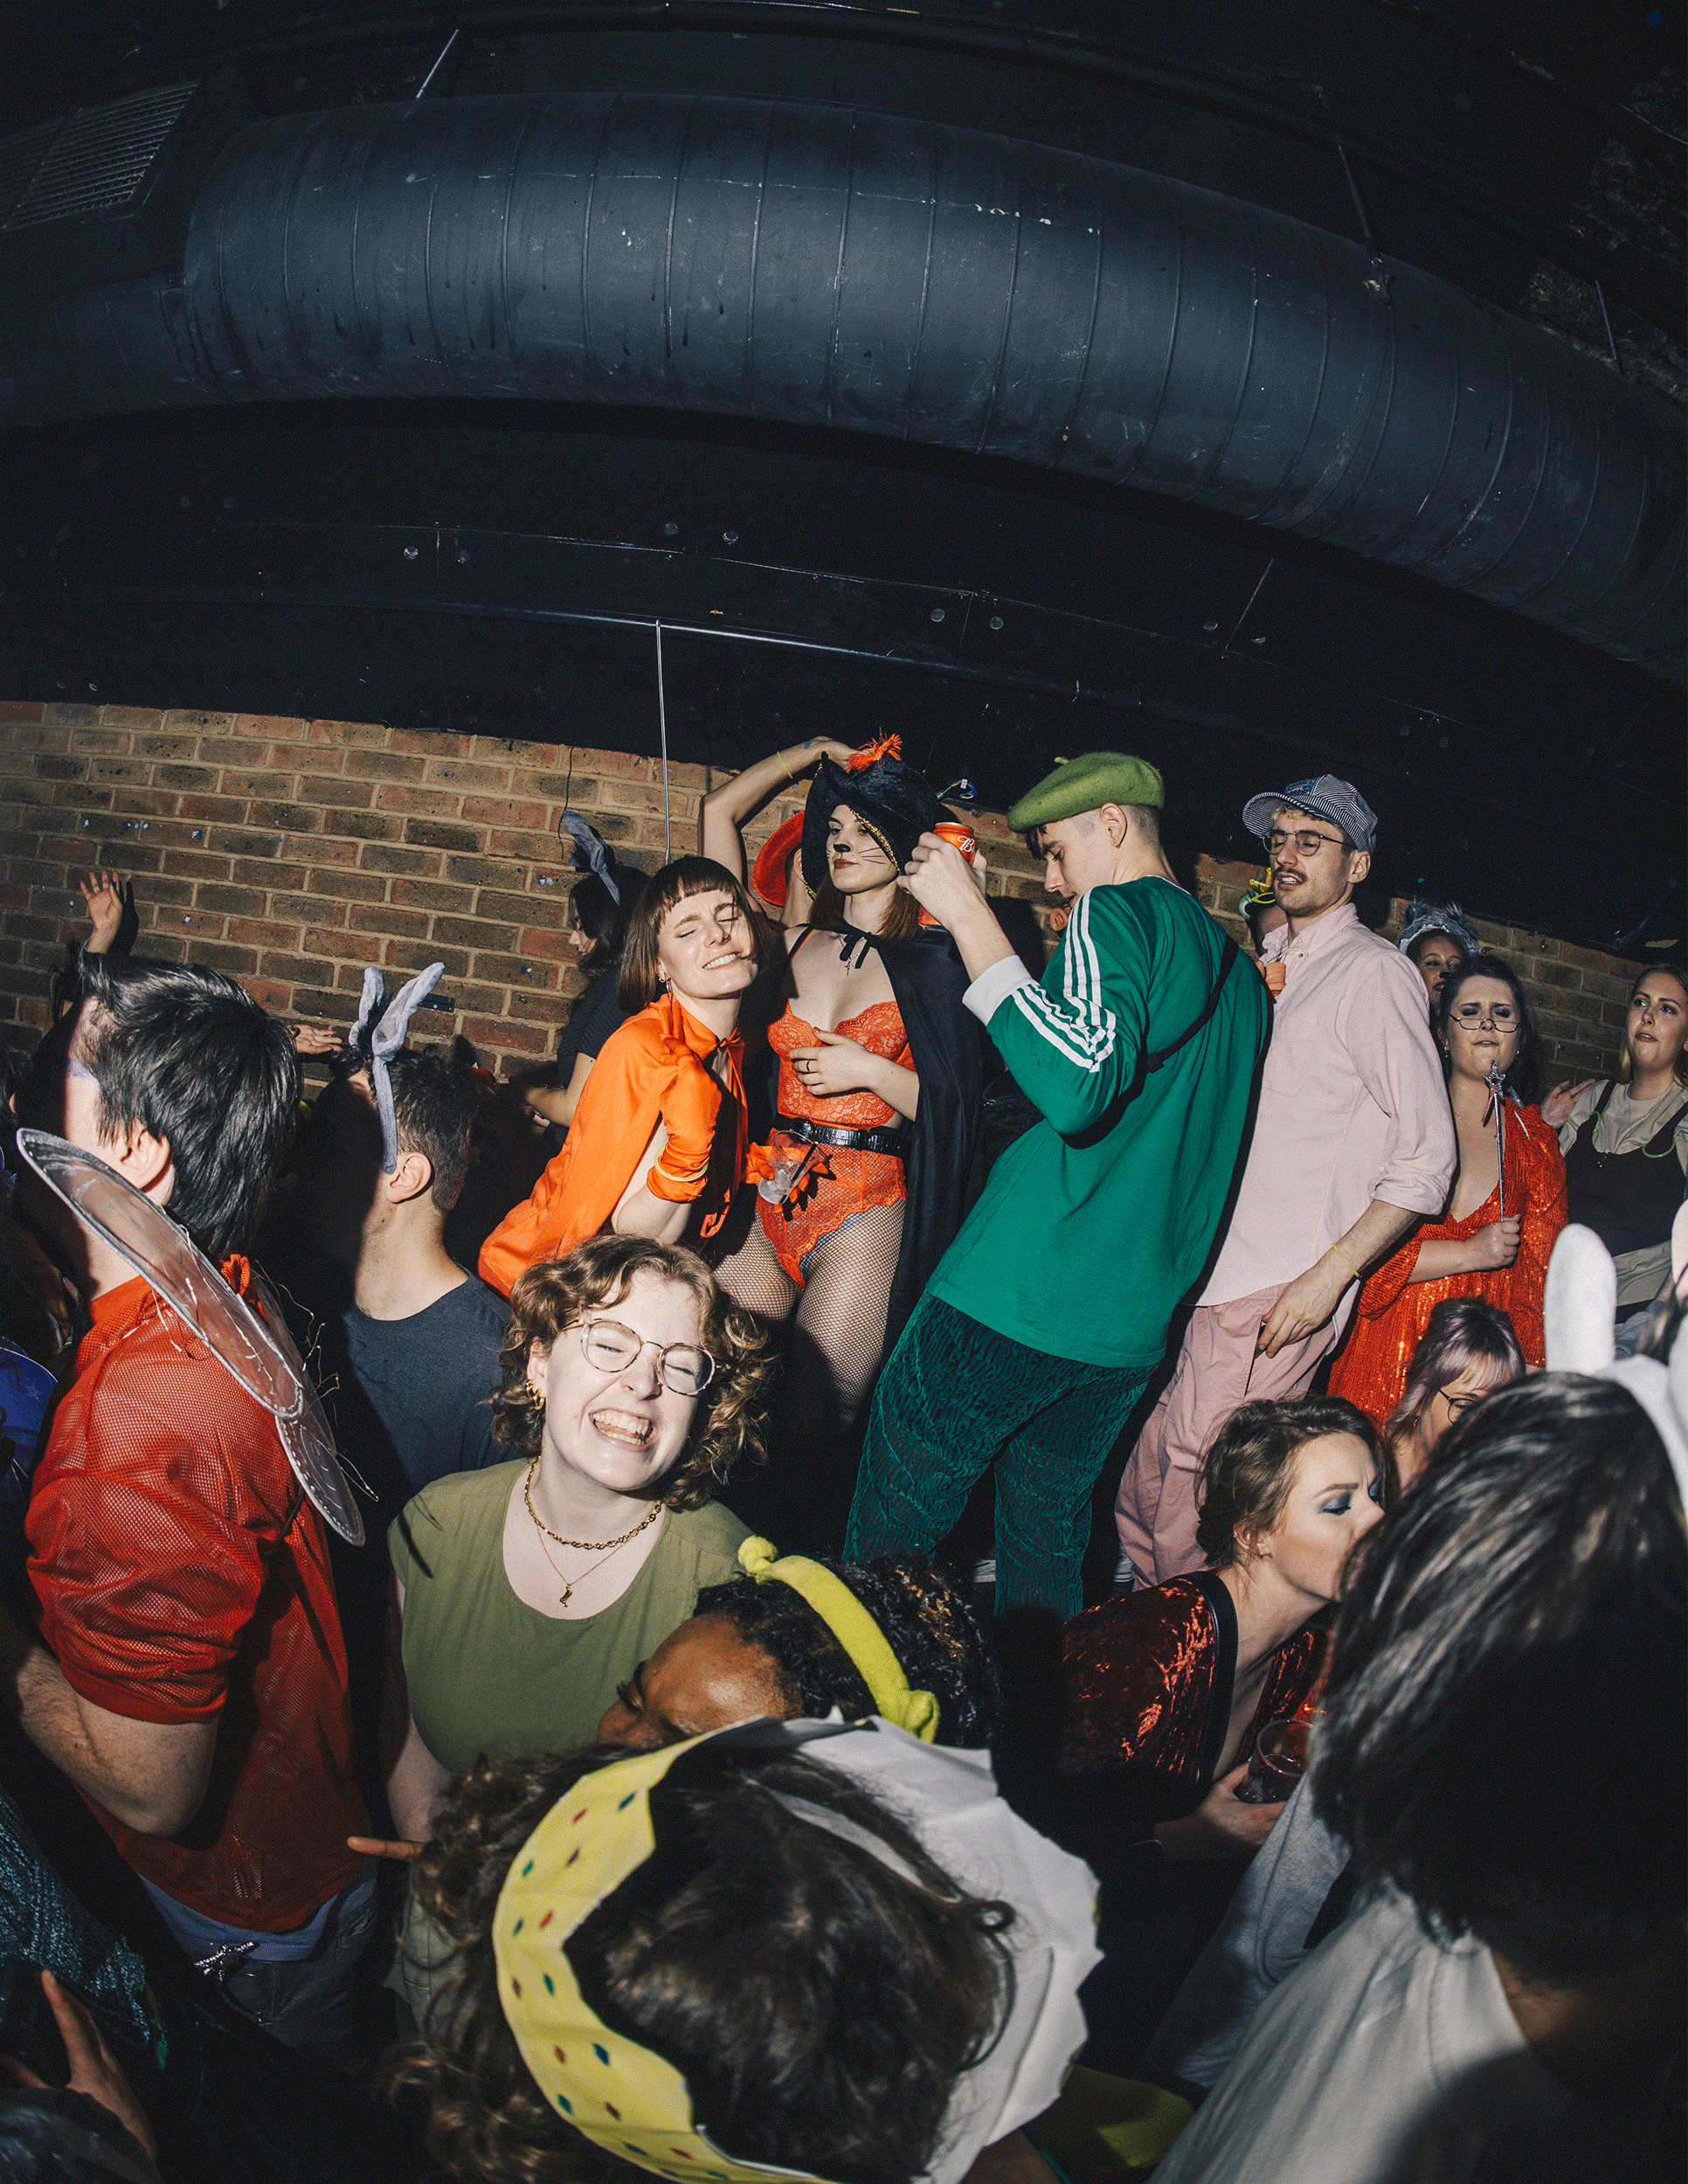 Shrek Rave, London: Clubbers enjoying themselves on the dancefloor